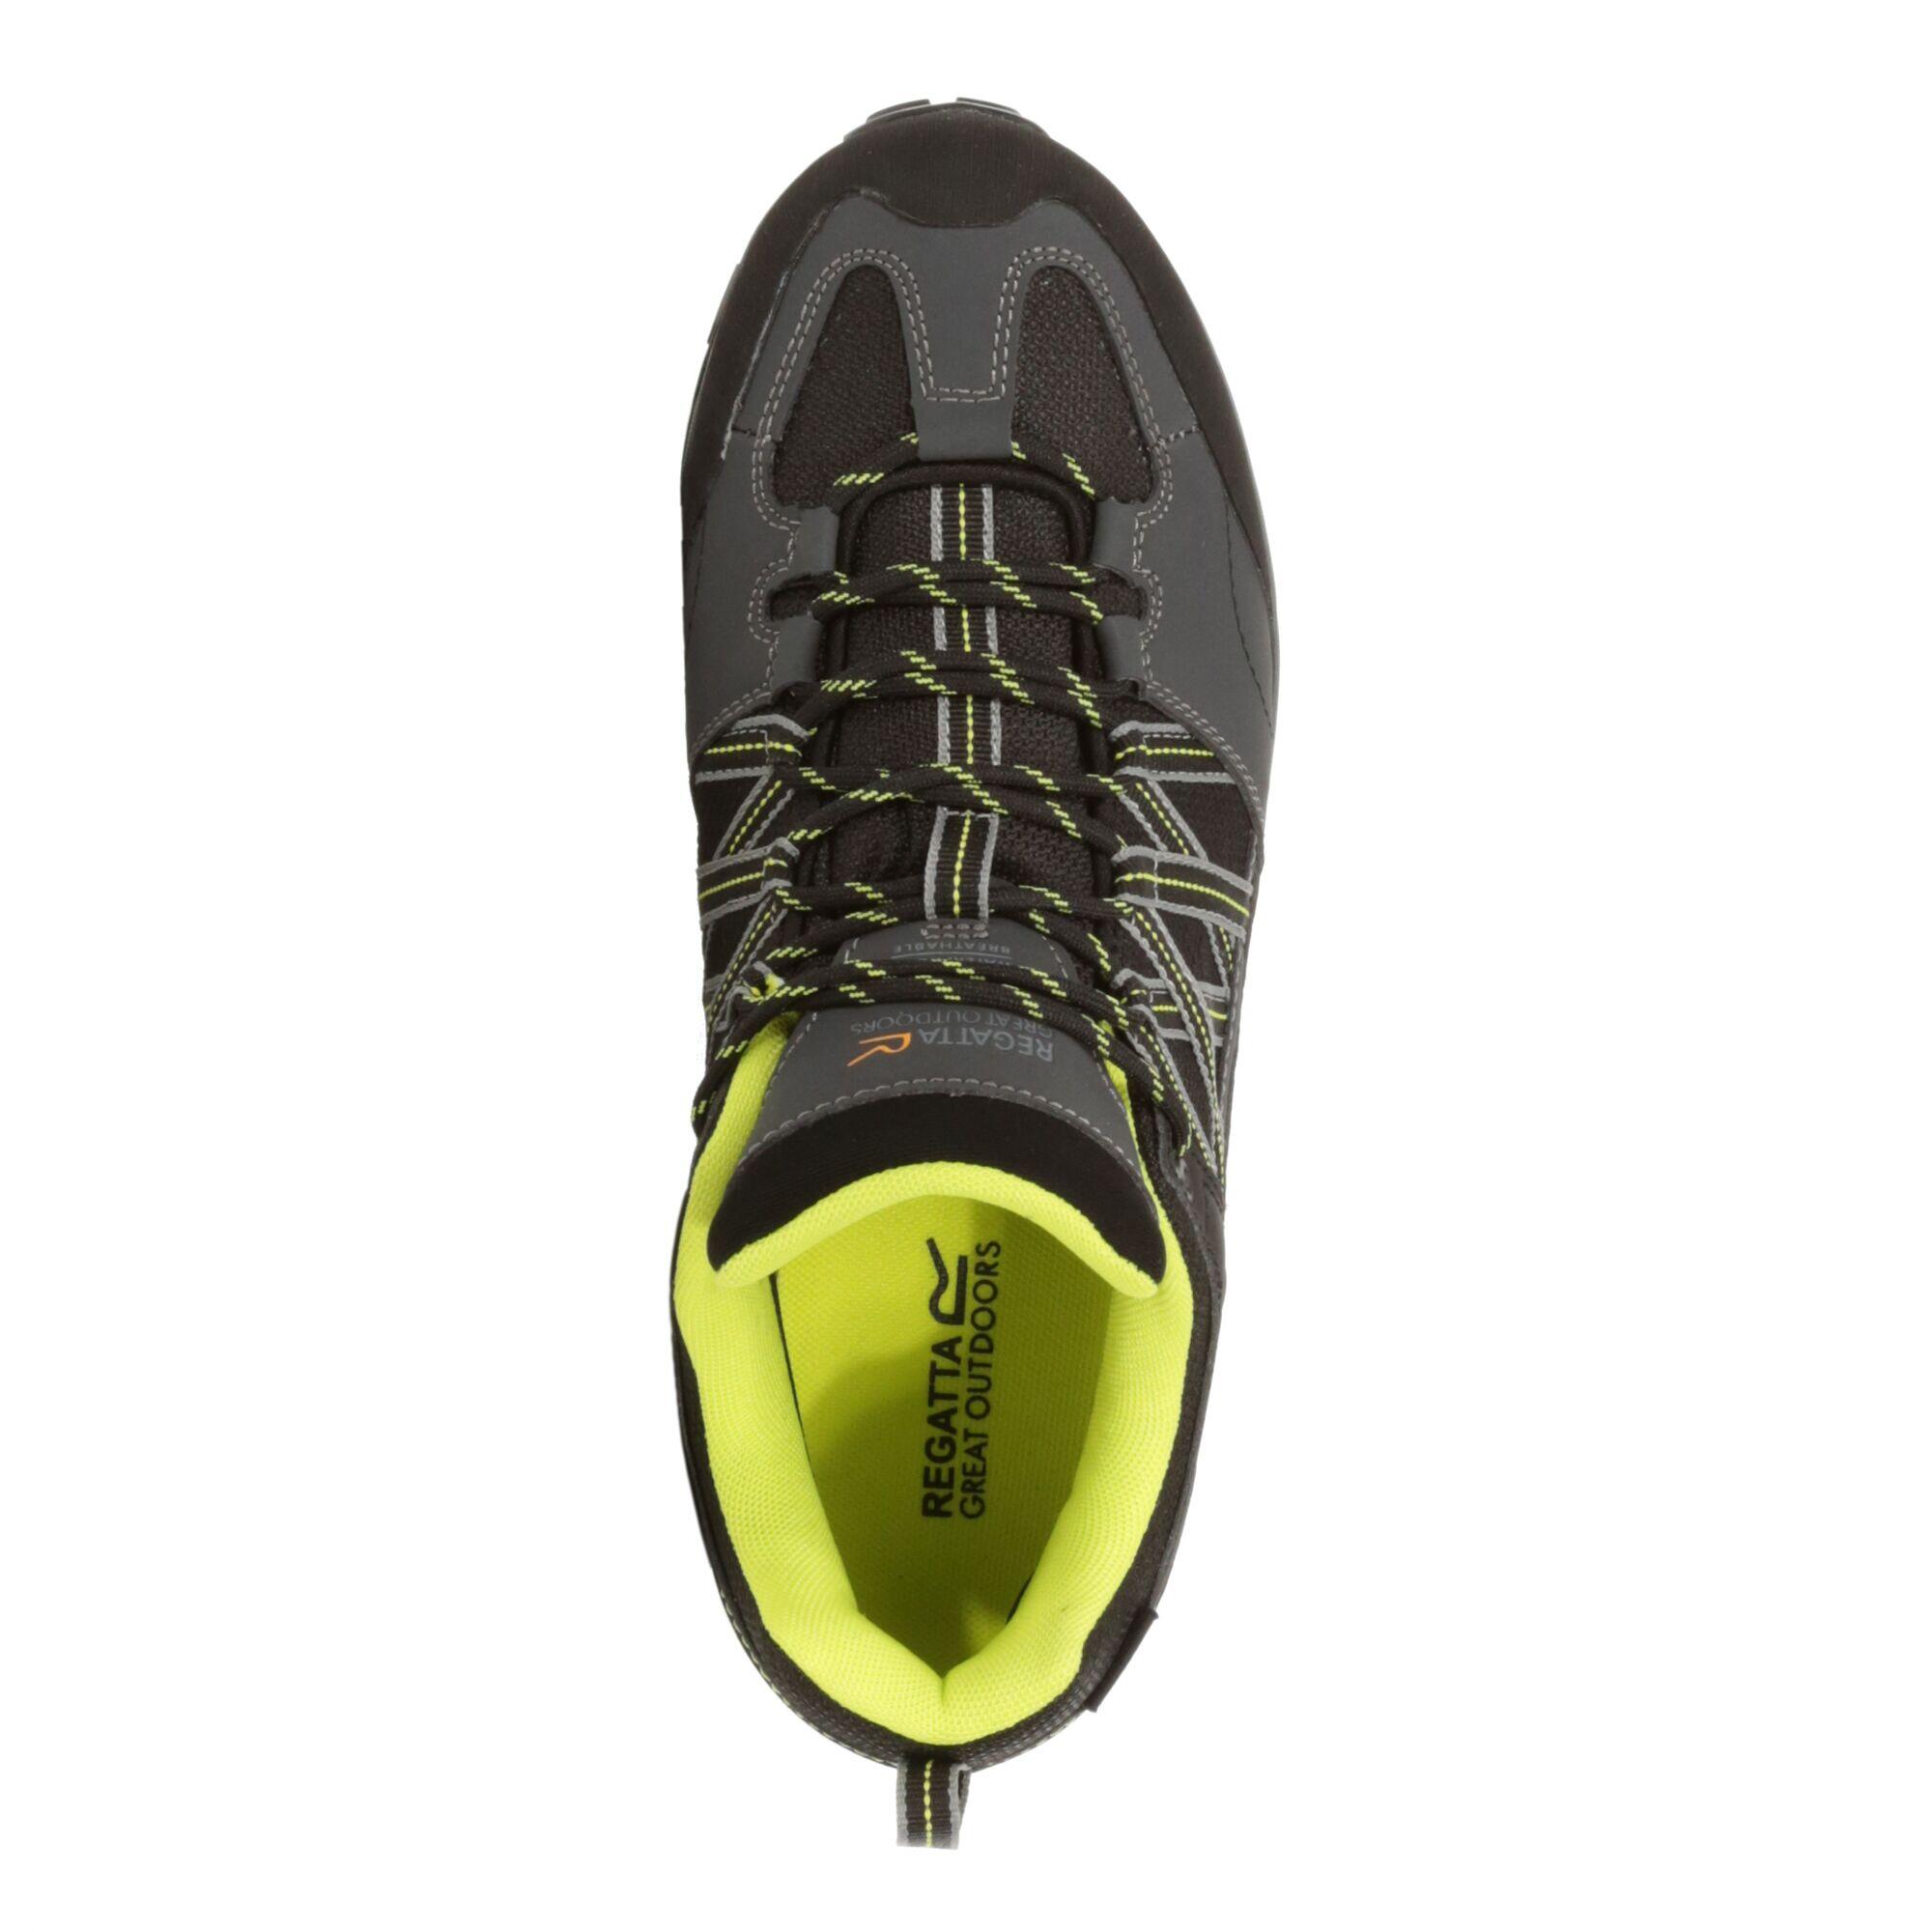 Samaris II Men's Hiking Shoes - Black/Light Green 3/3